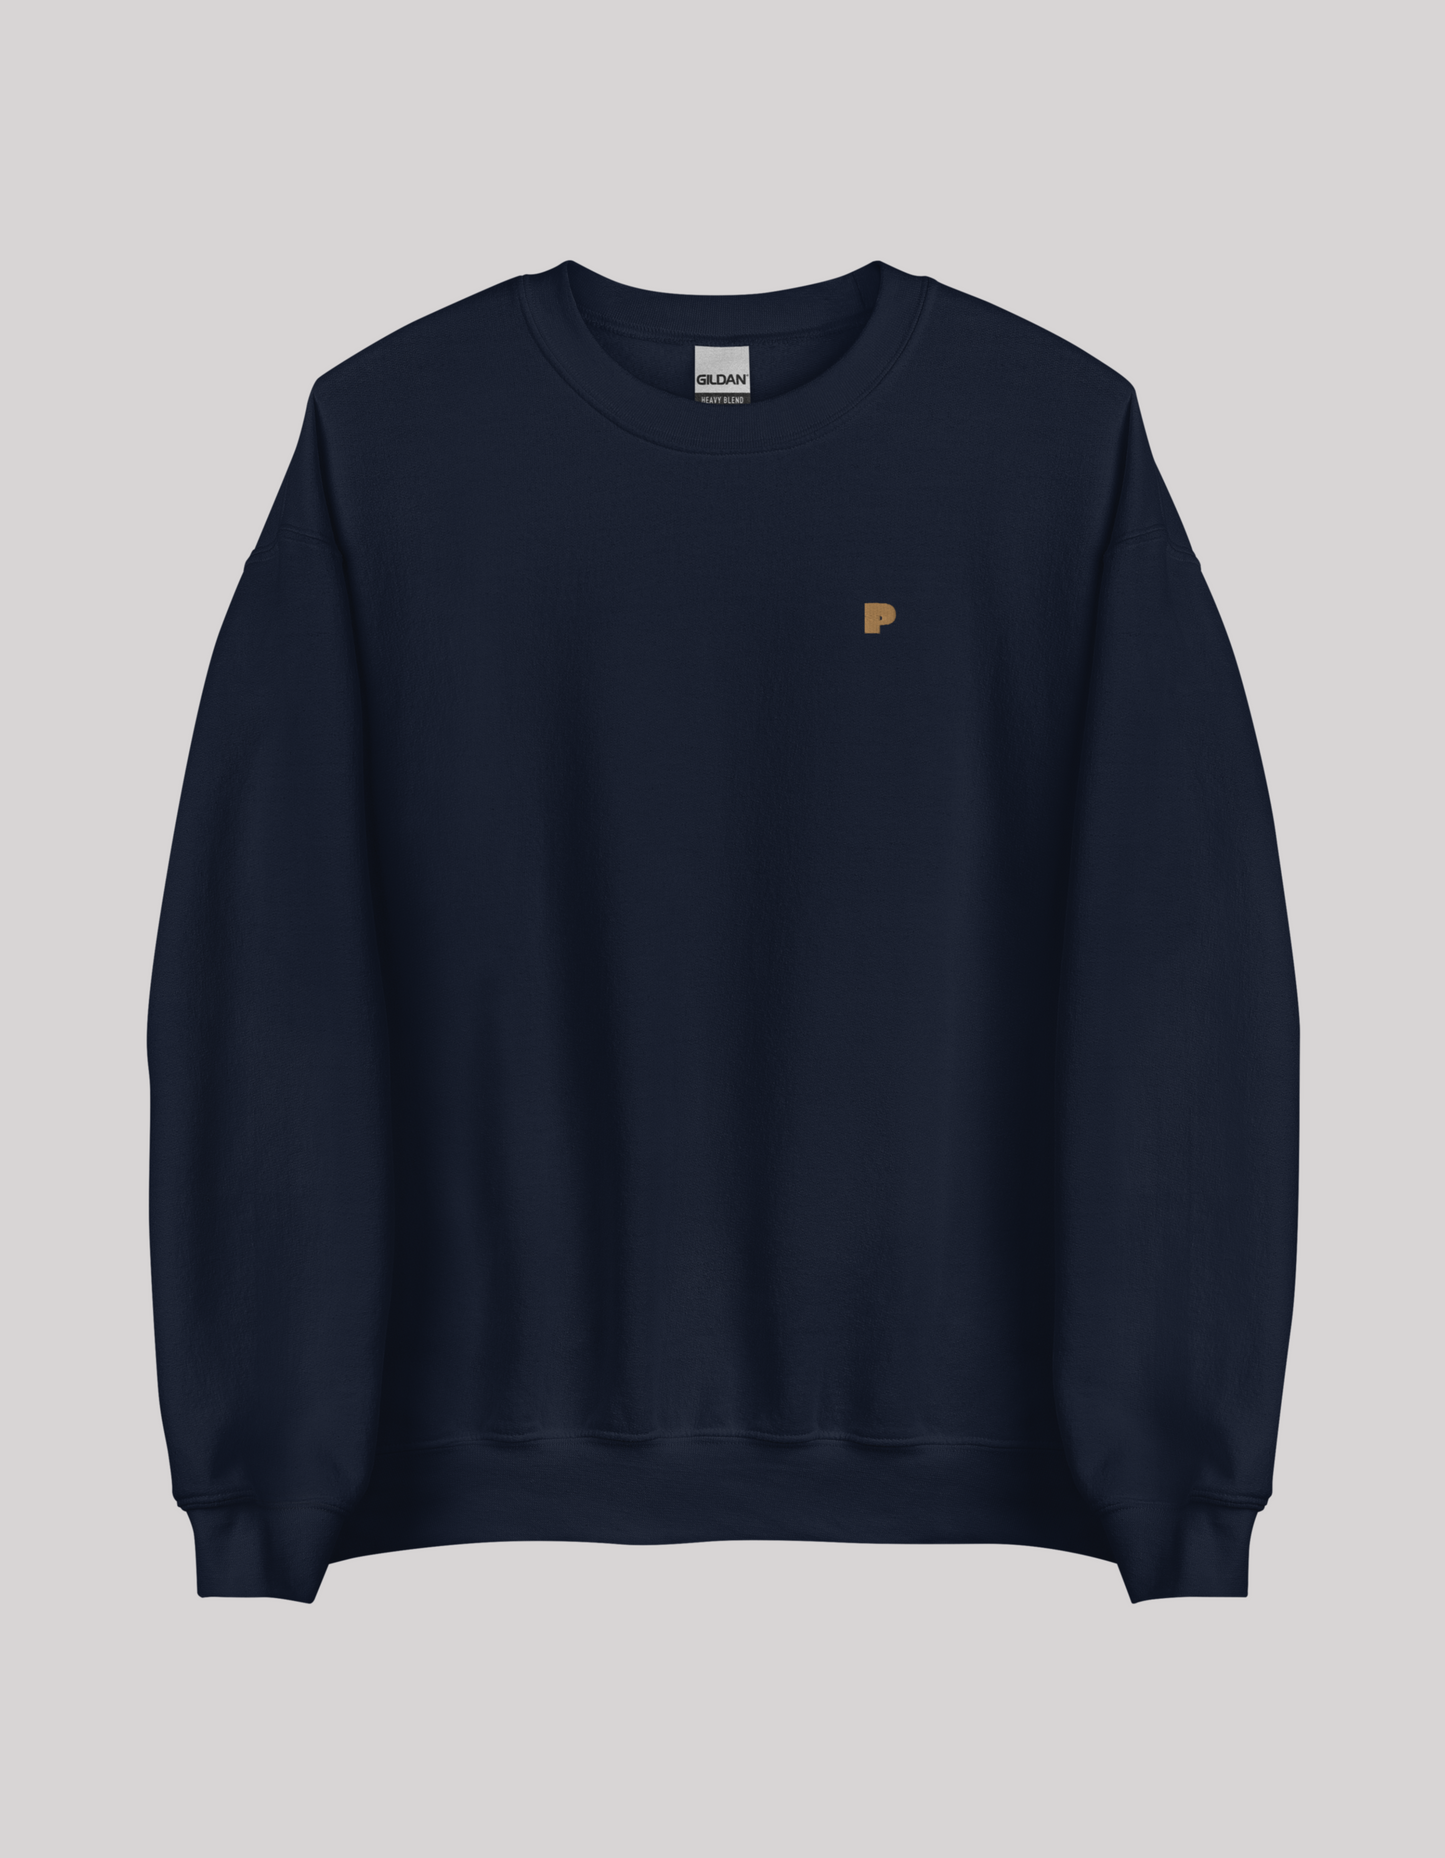 Unisex Sweatshirt Fat P Embrodery